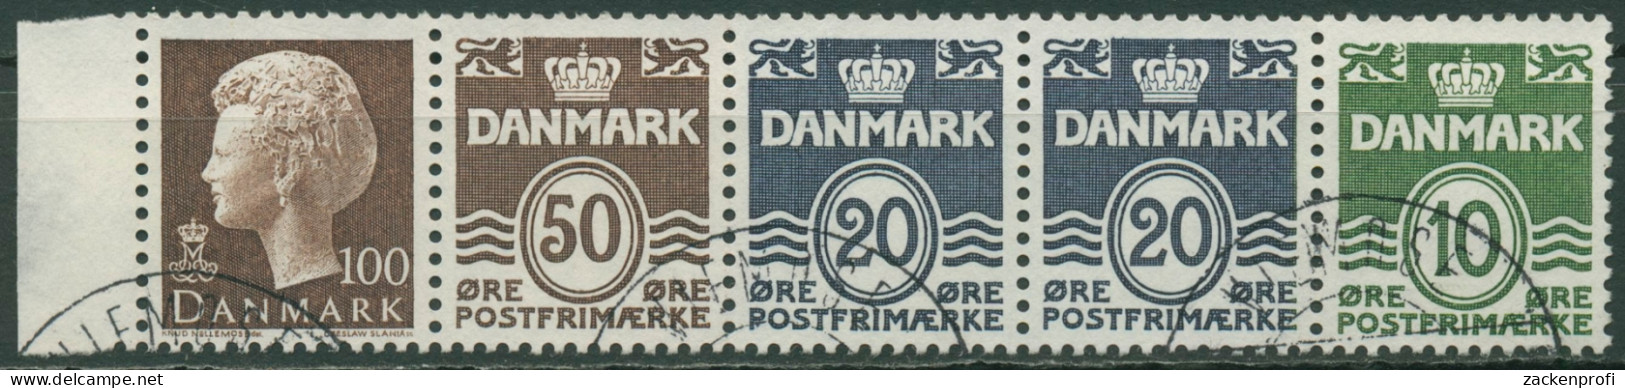 Dänemark 1977 Markenheftchenblatt H-Bl. 15 Gestempelt (C96549) - Markenheftchen